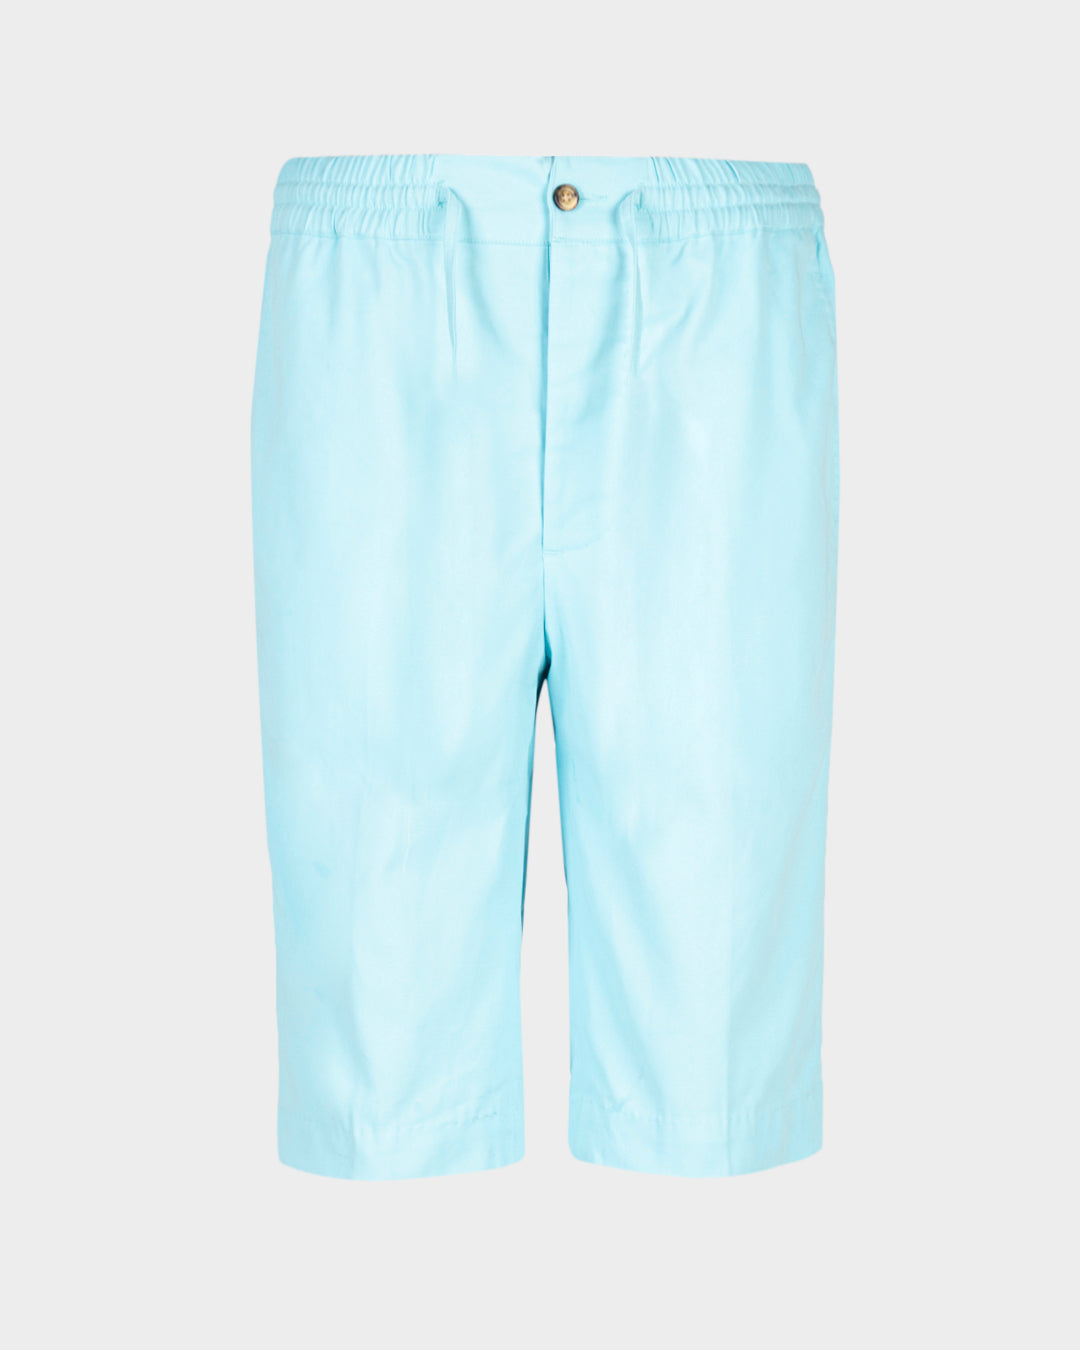 Gulf Stream Blue Cotton Twill Shorts